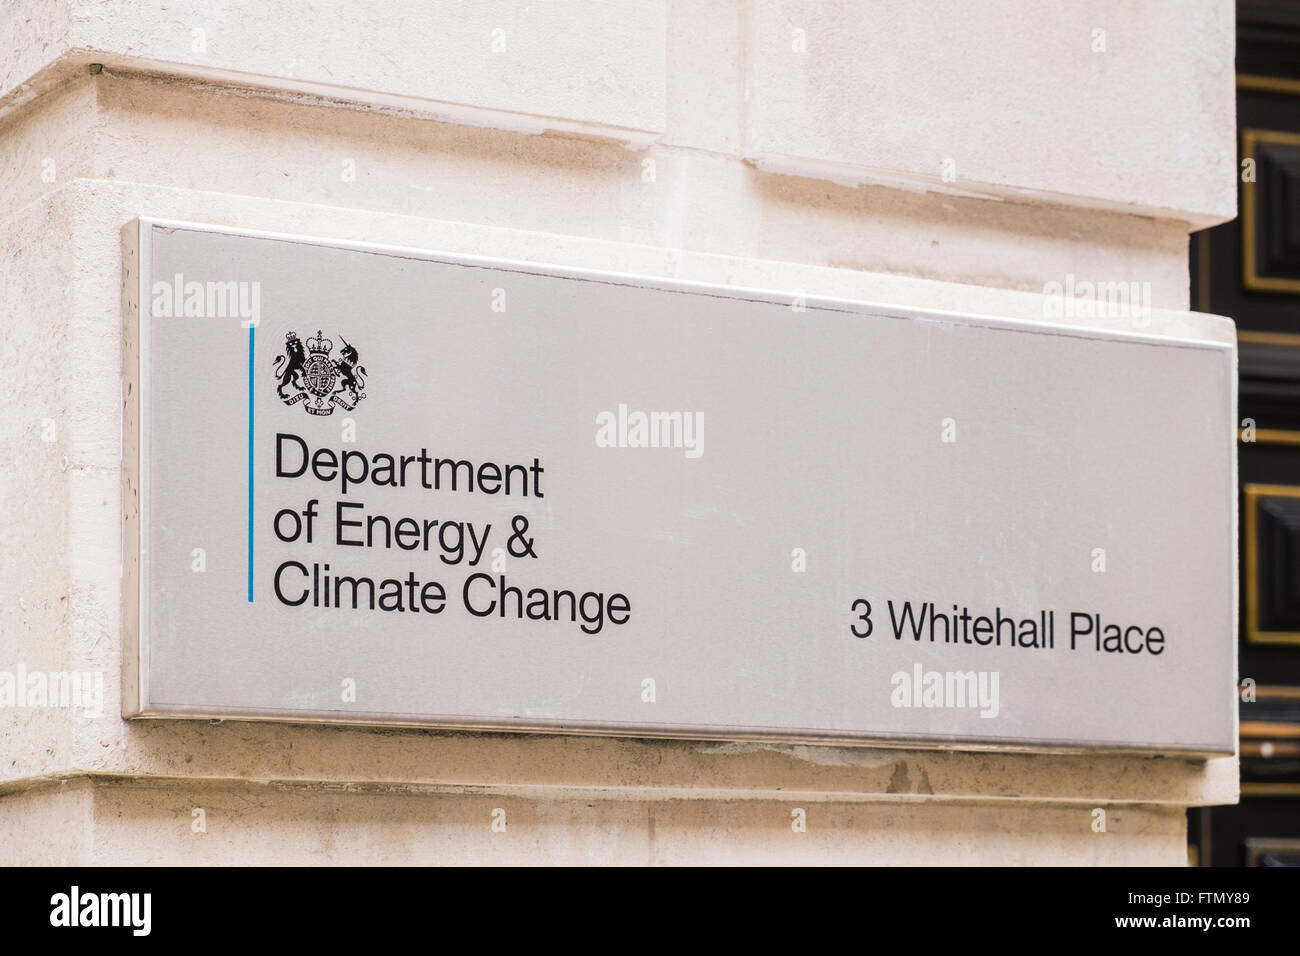 Department of Energy & Climate Change, London, England, U.K. Stock Photo